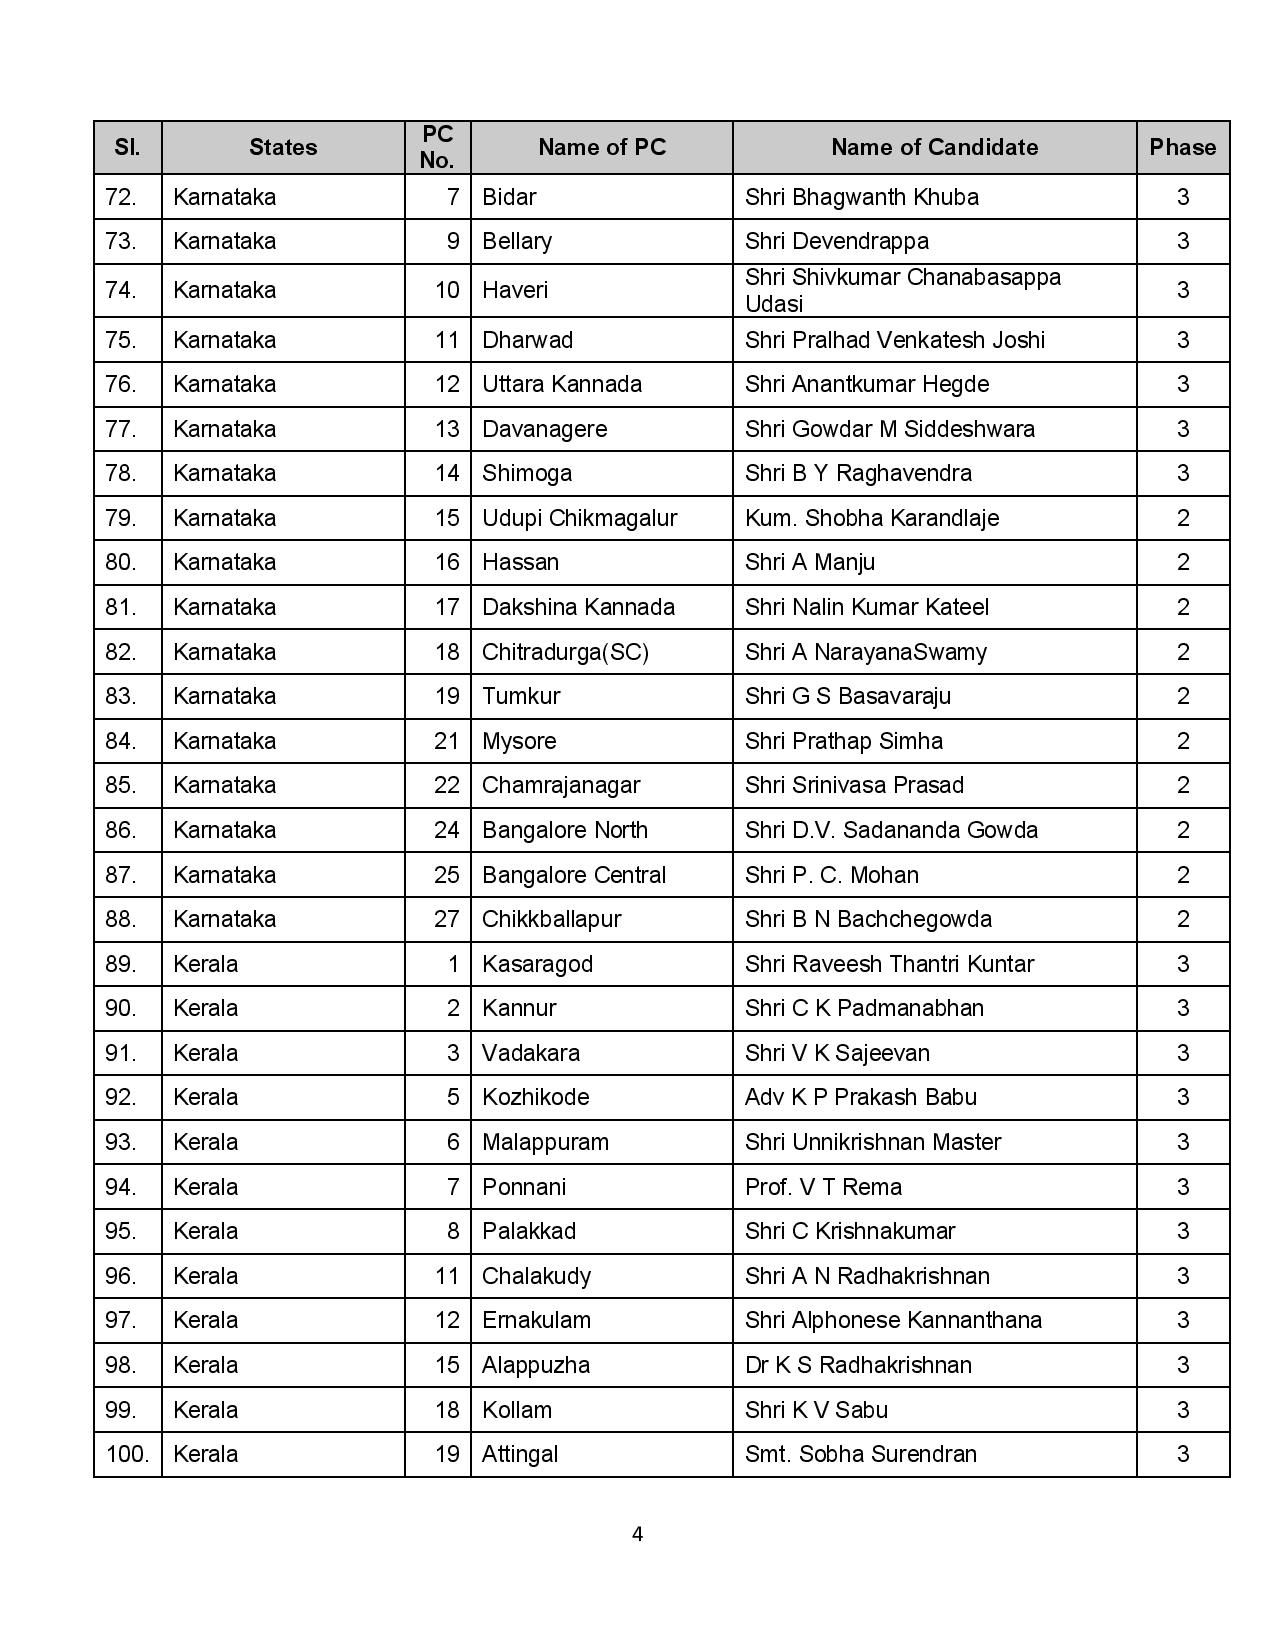 bjp announces first list for 2019 loksabha election, no place for advani - Satya Hindi